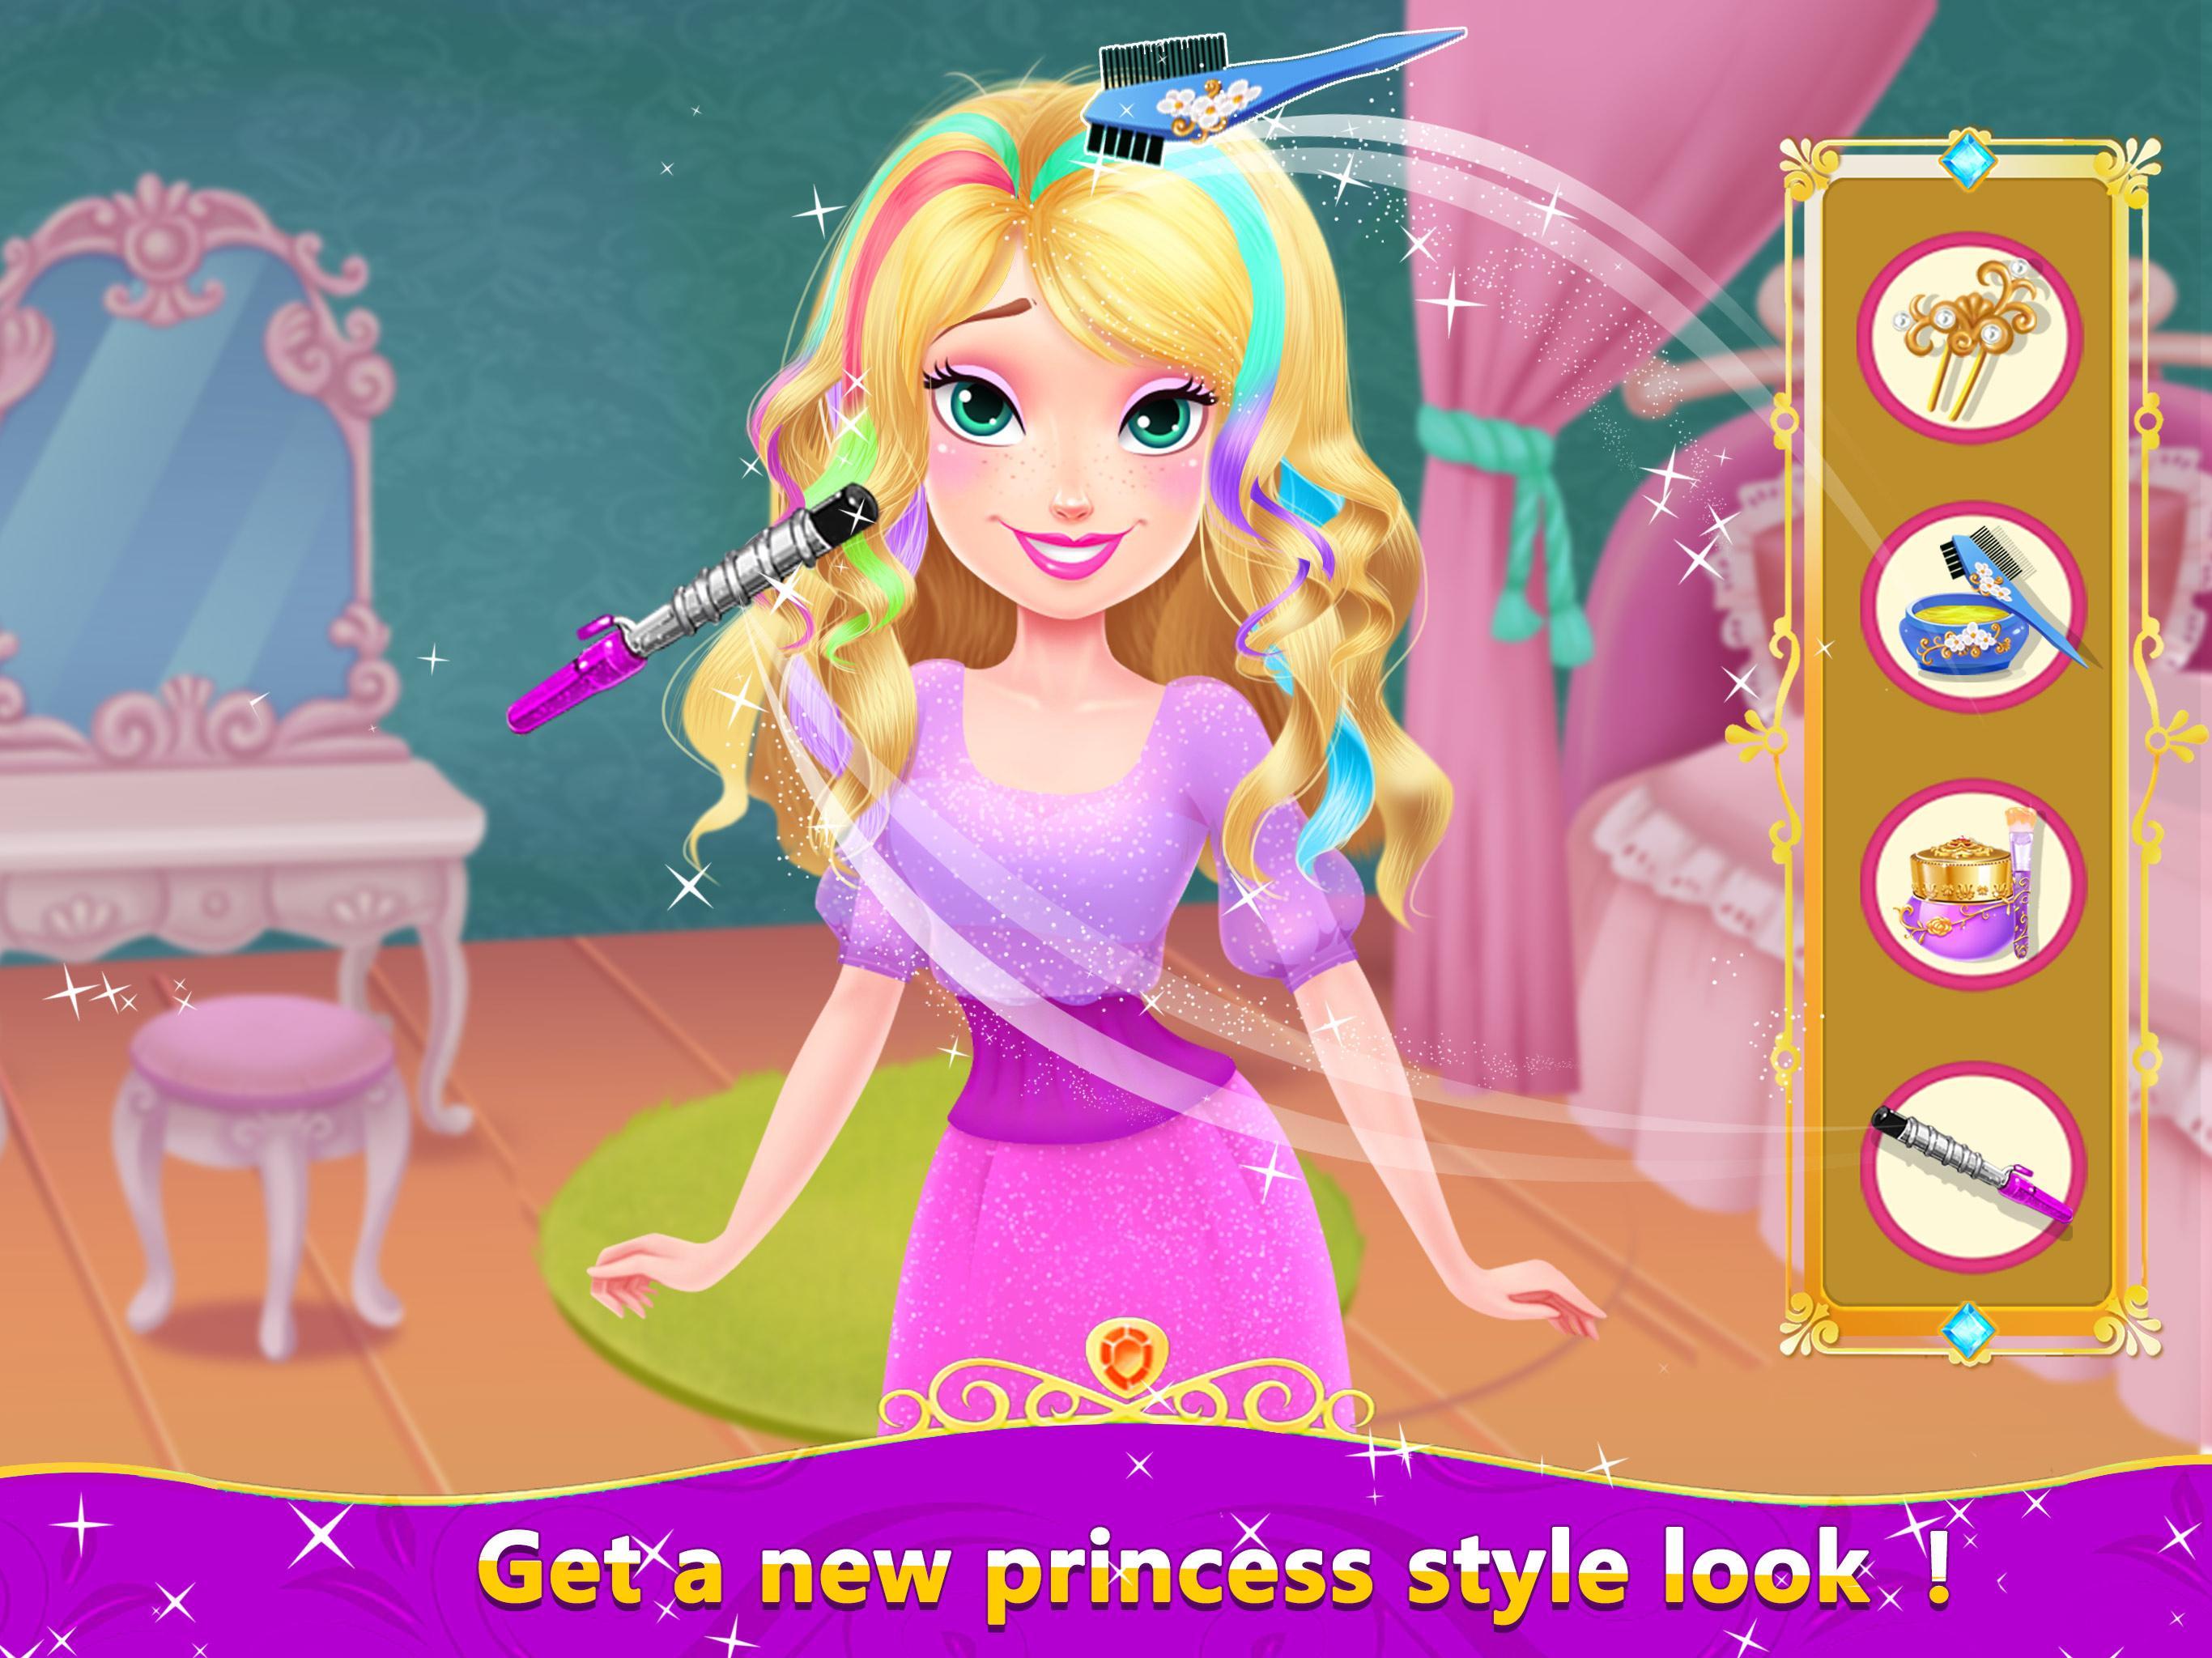 Игра принцесса 3. Принцесса с 3 волосинками. Андроид игры принцесса от 3 его лица. Принцесса Хэйр 2. Принцесса и волосы из окна игра.